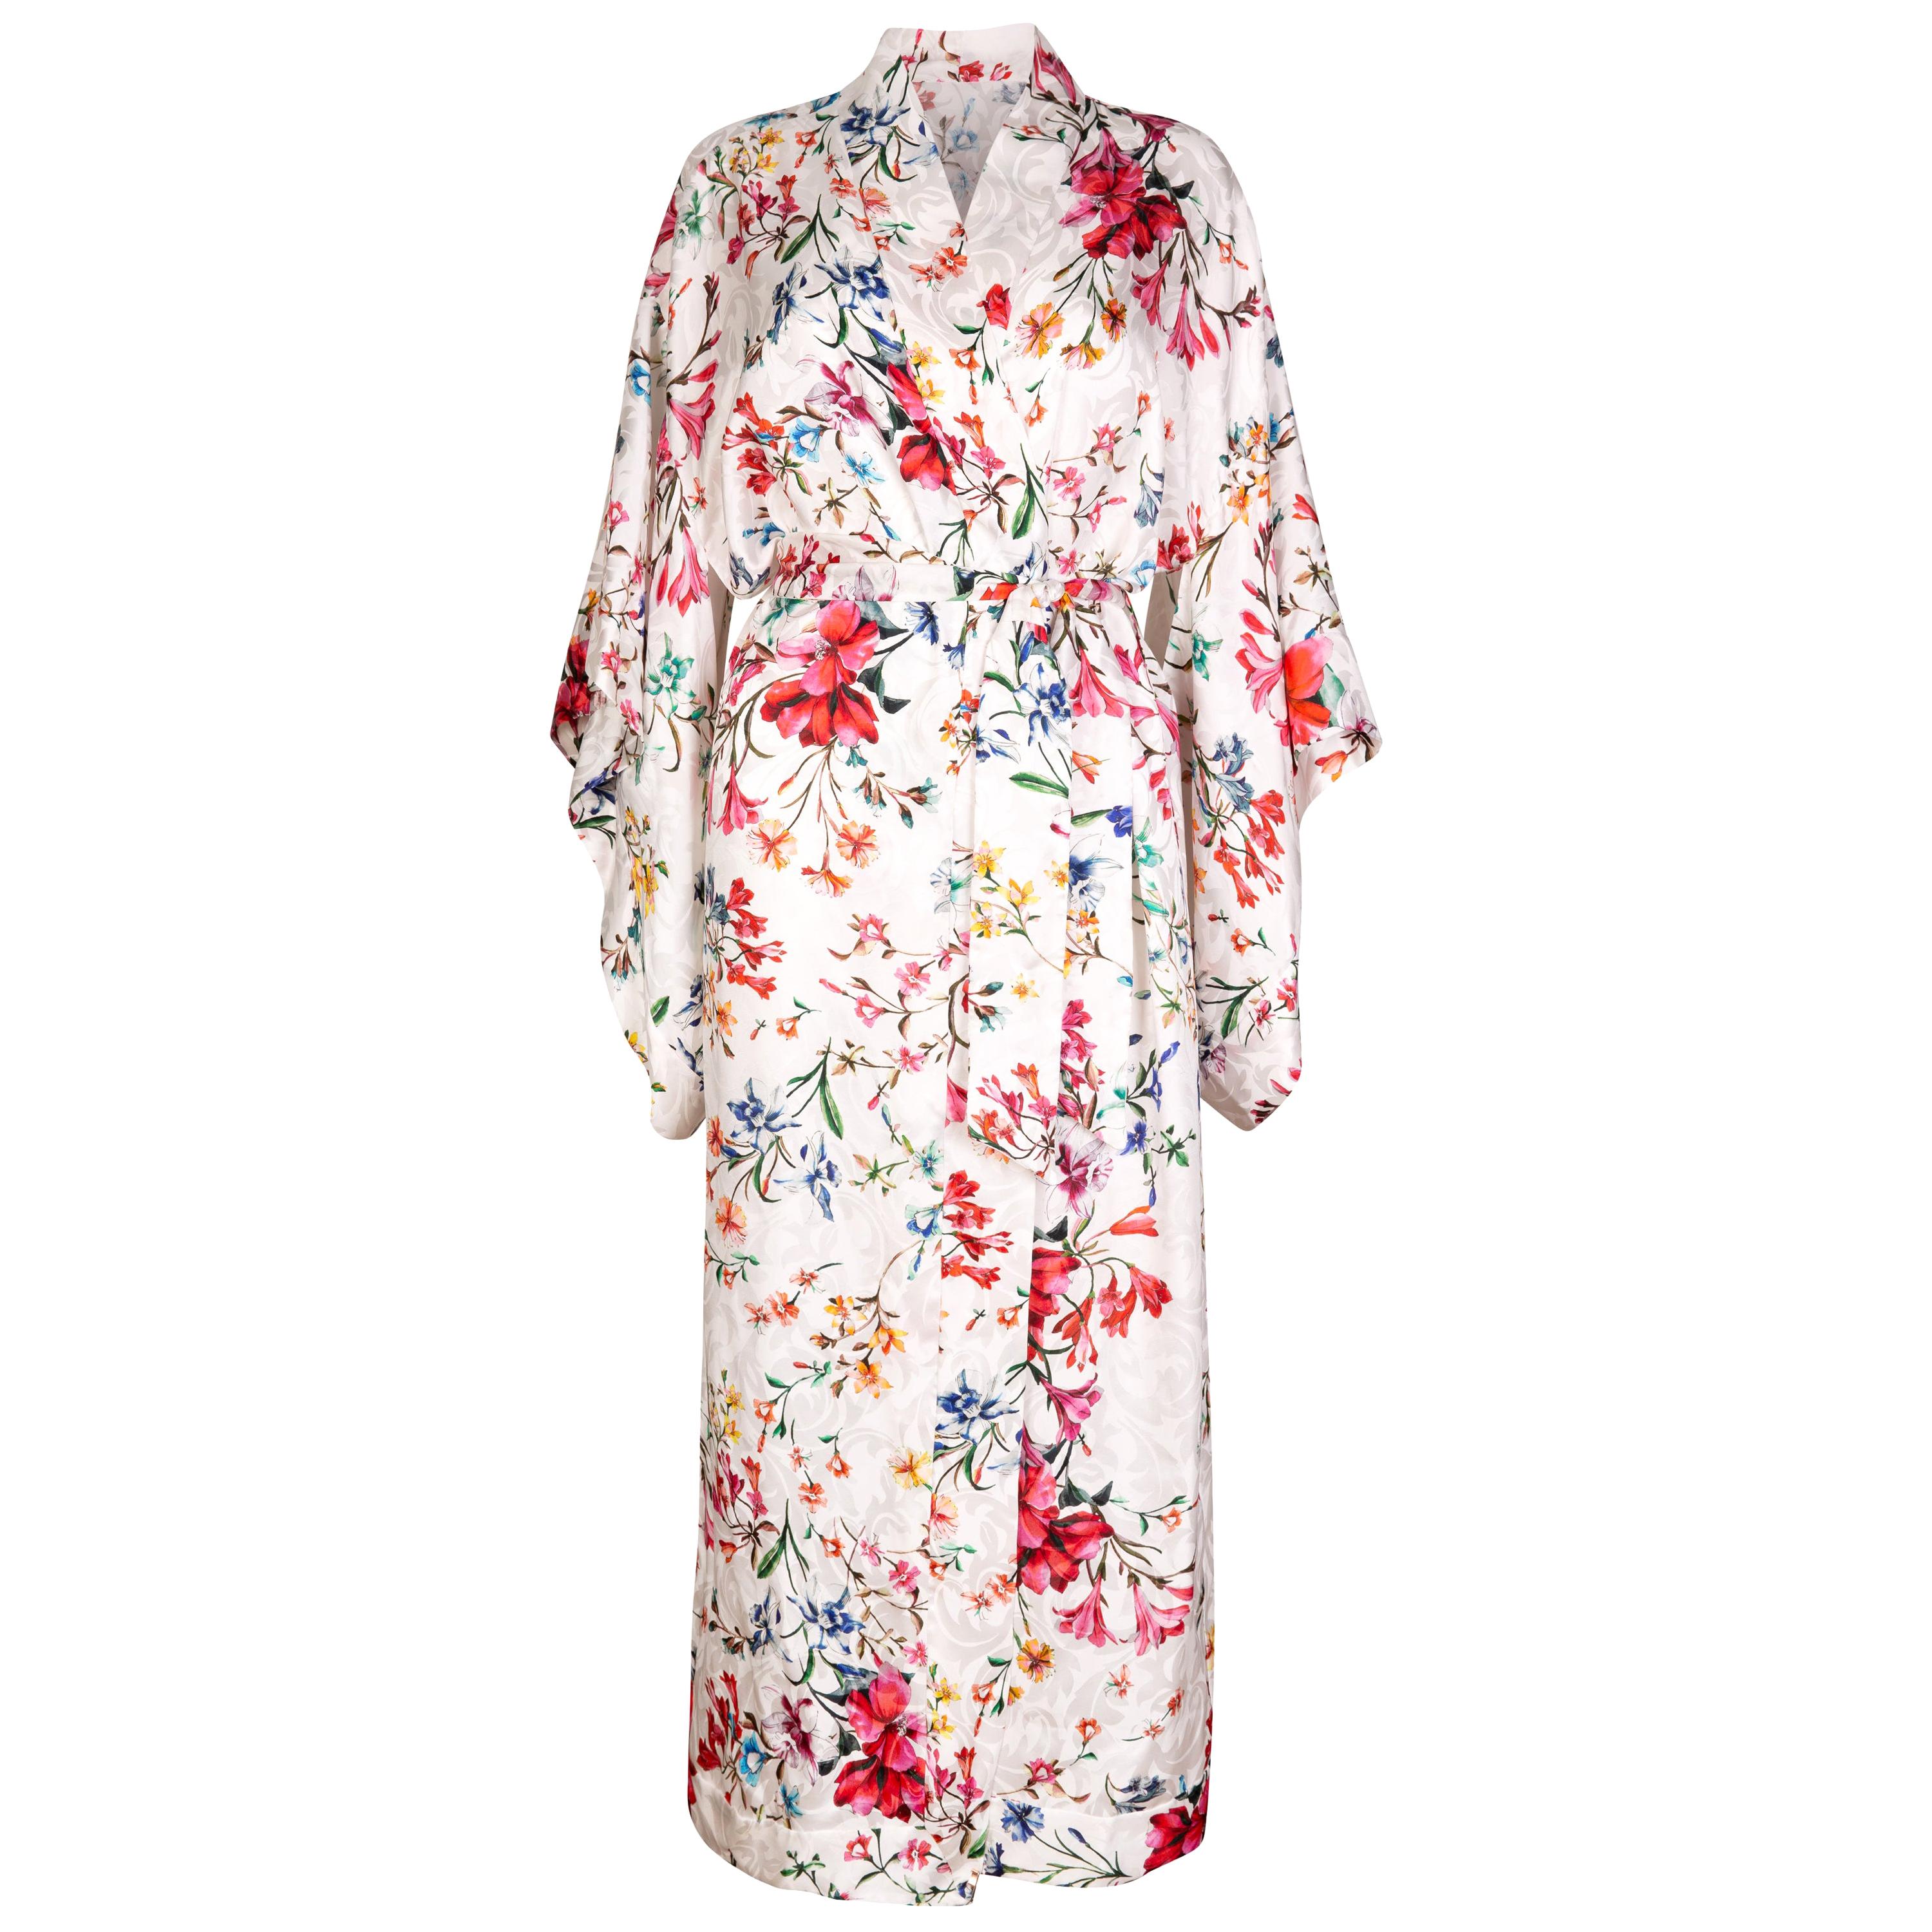 Verheyen London Flower Kimono dress in Italian Silk Satin Size small  - New 